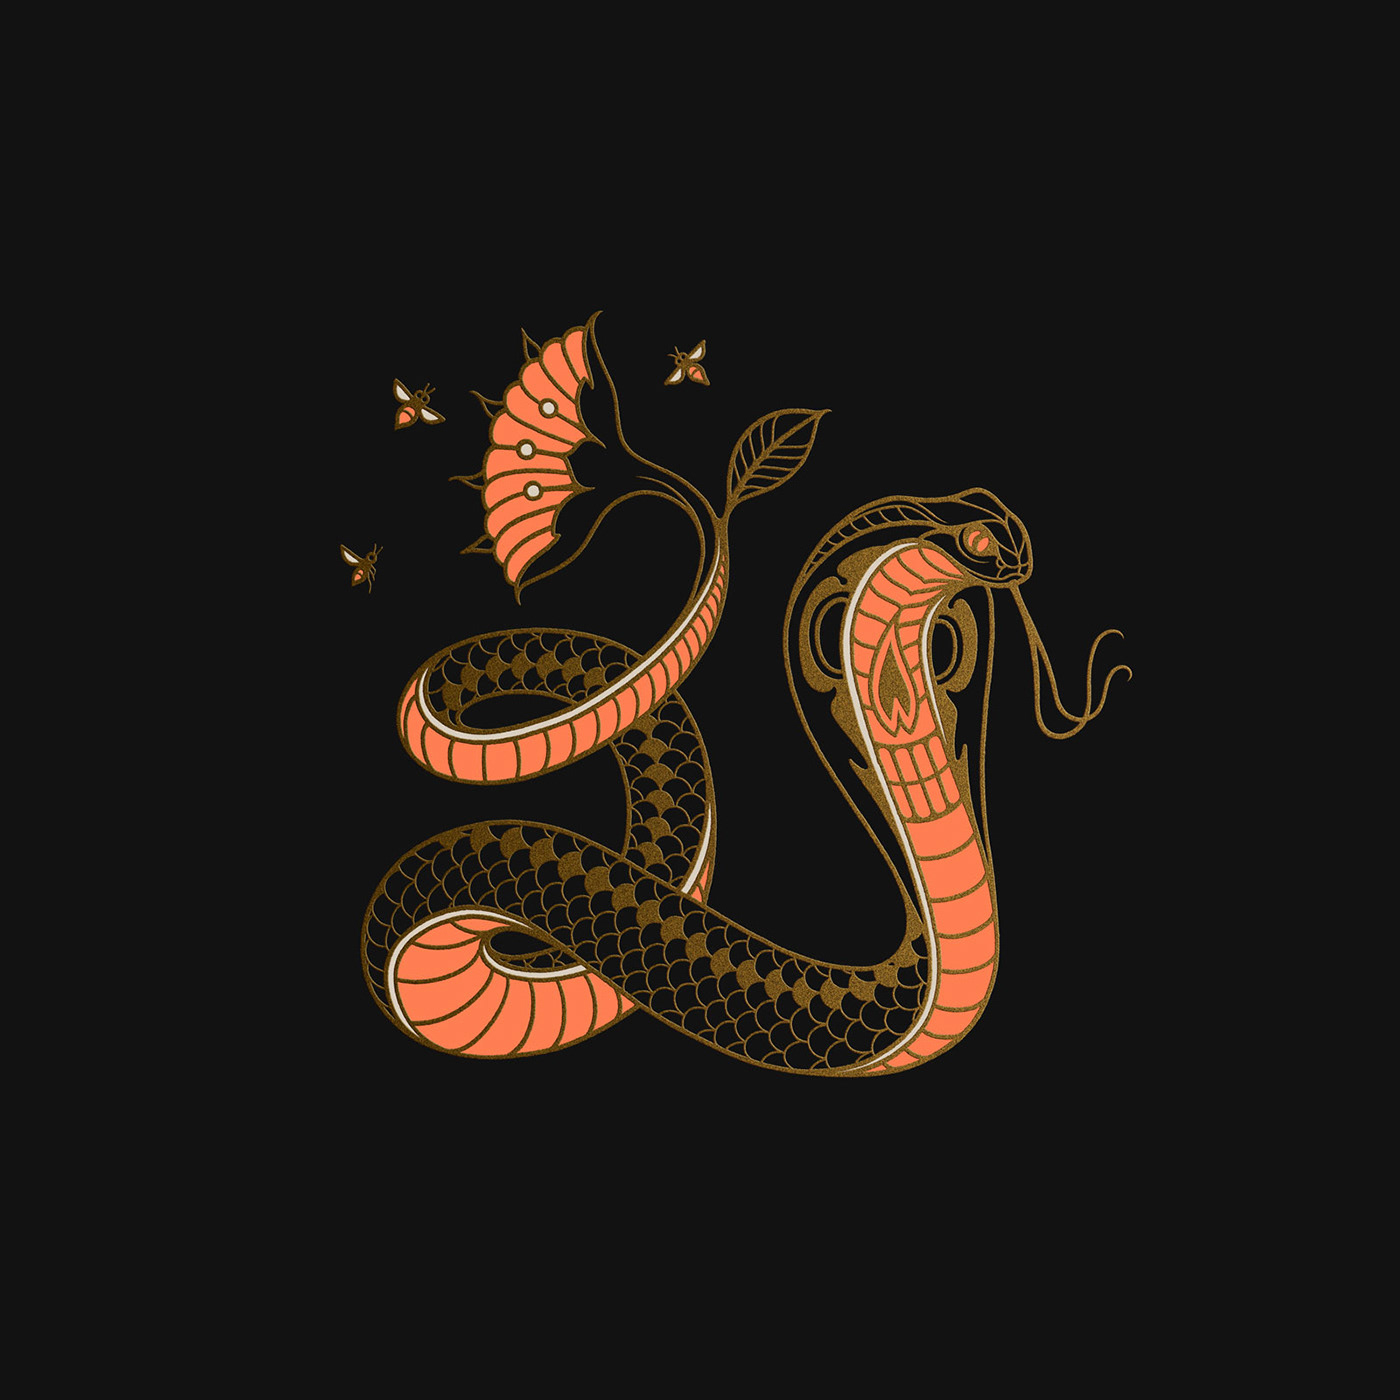 Golden Snake by Jared Tuttle